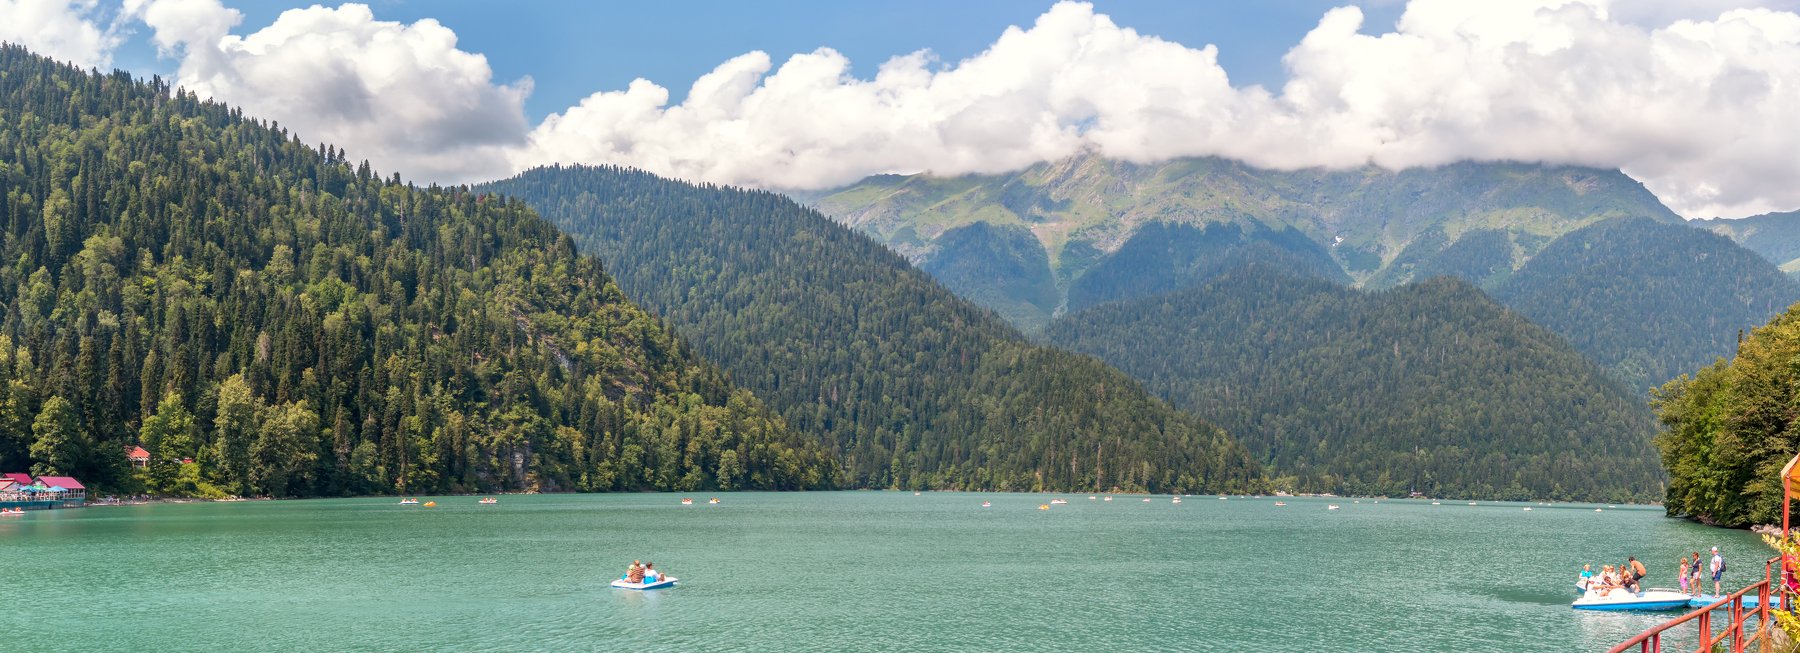 Абхазия,Рица,озеро,горы,панорама,путшествия,отдых, Дулов Валерий